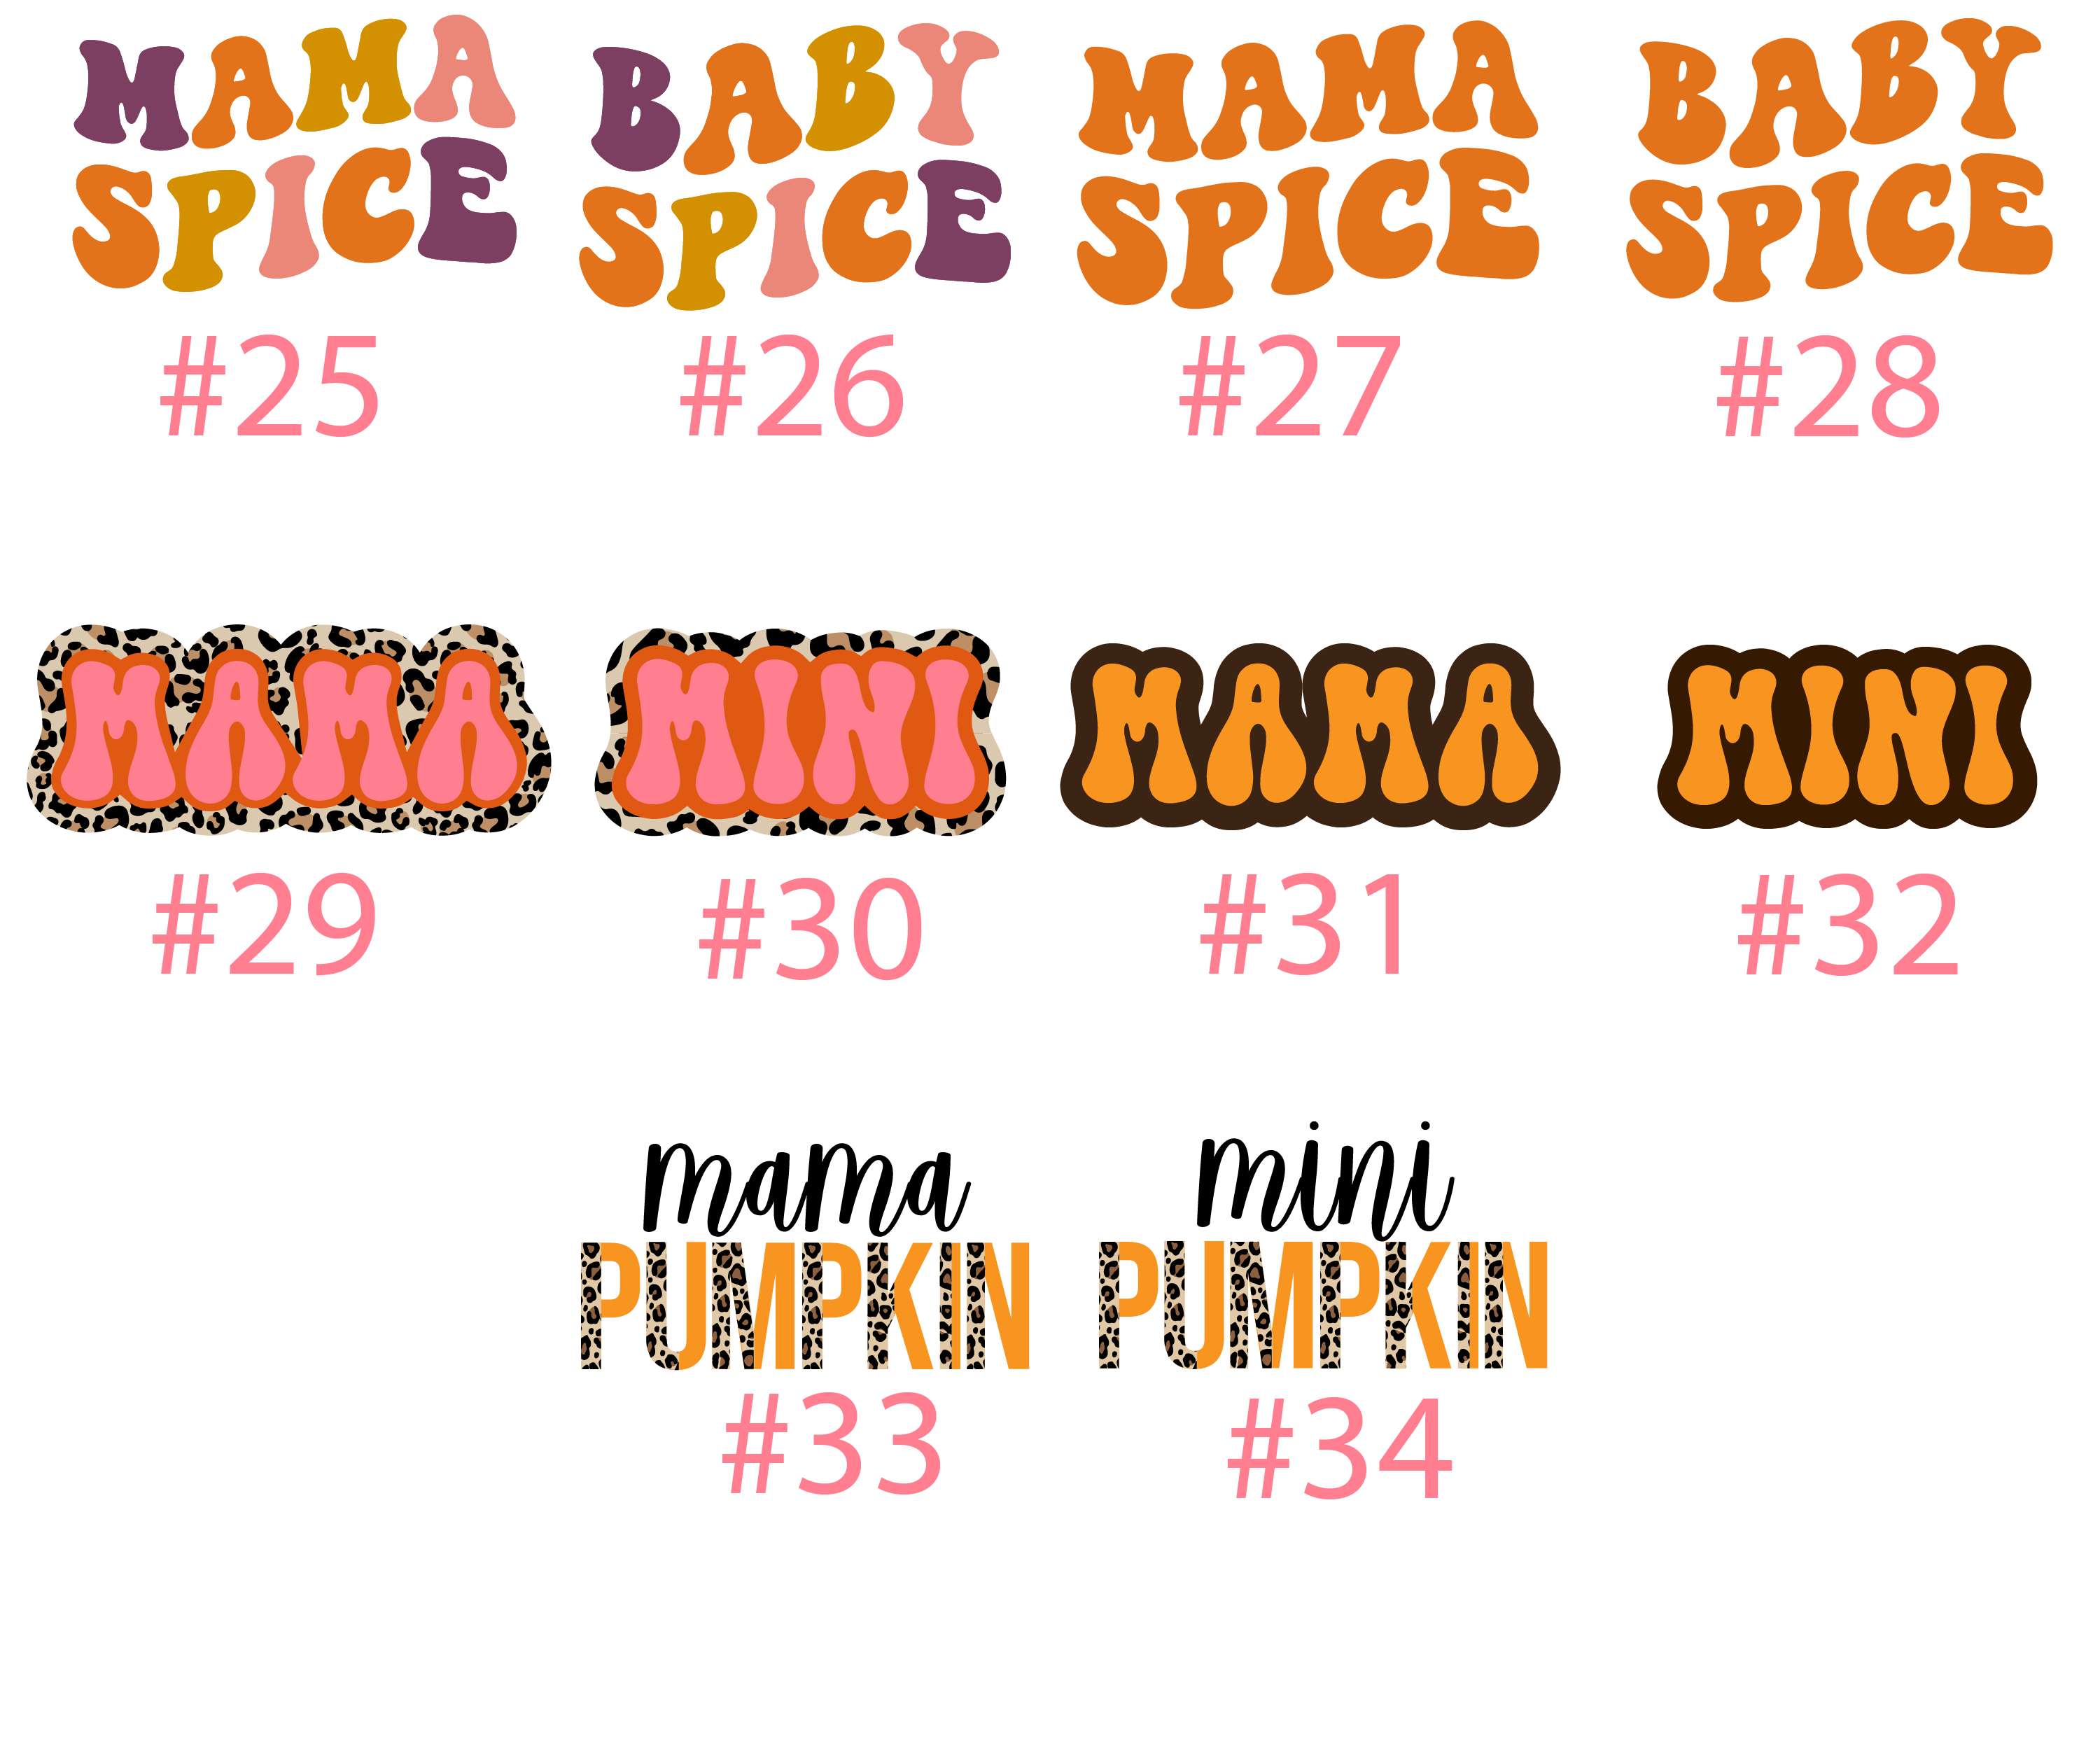 Mama Mini Fall Pumpkin Vibes Matching Tees